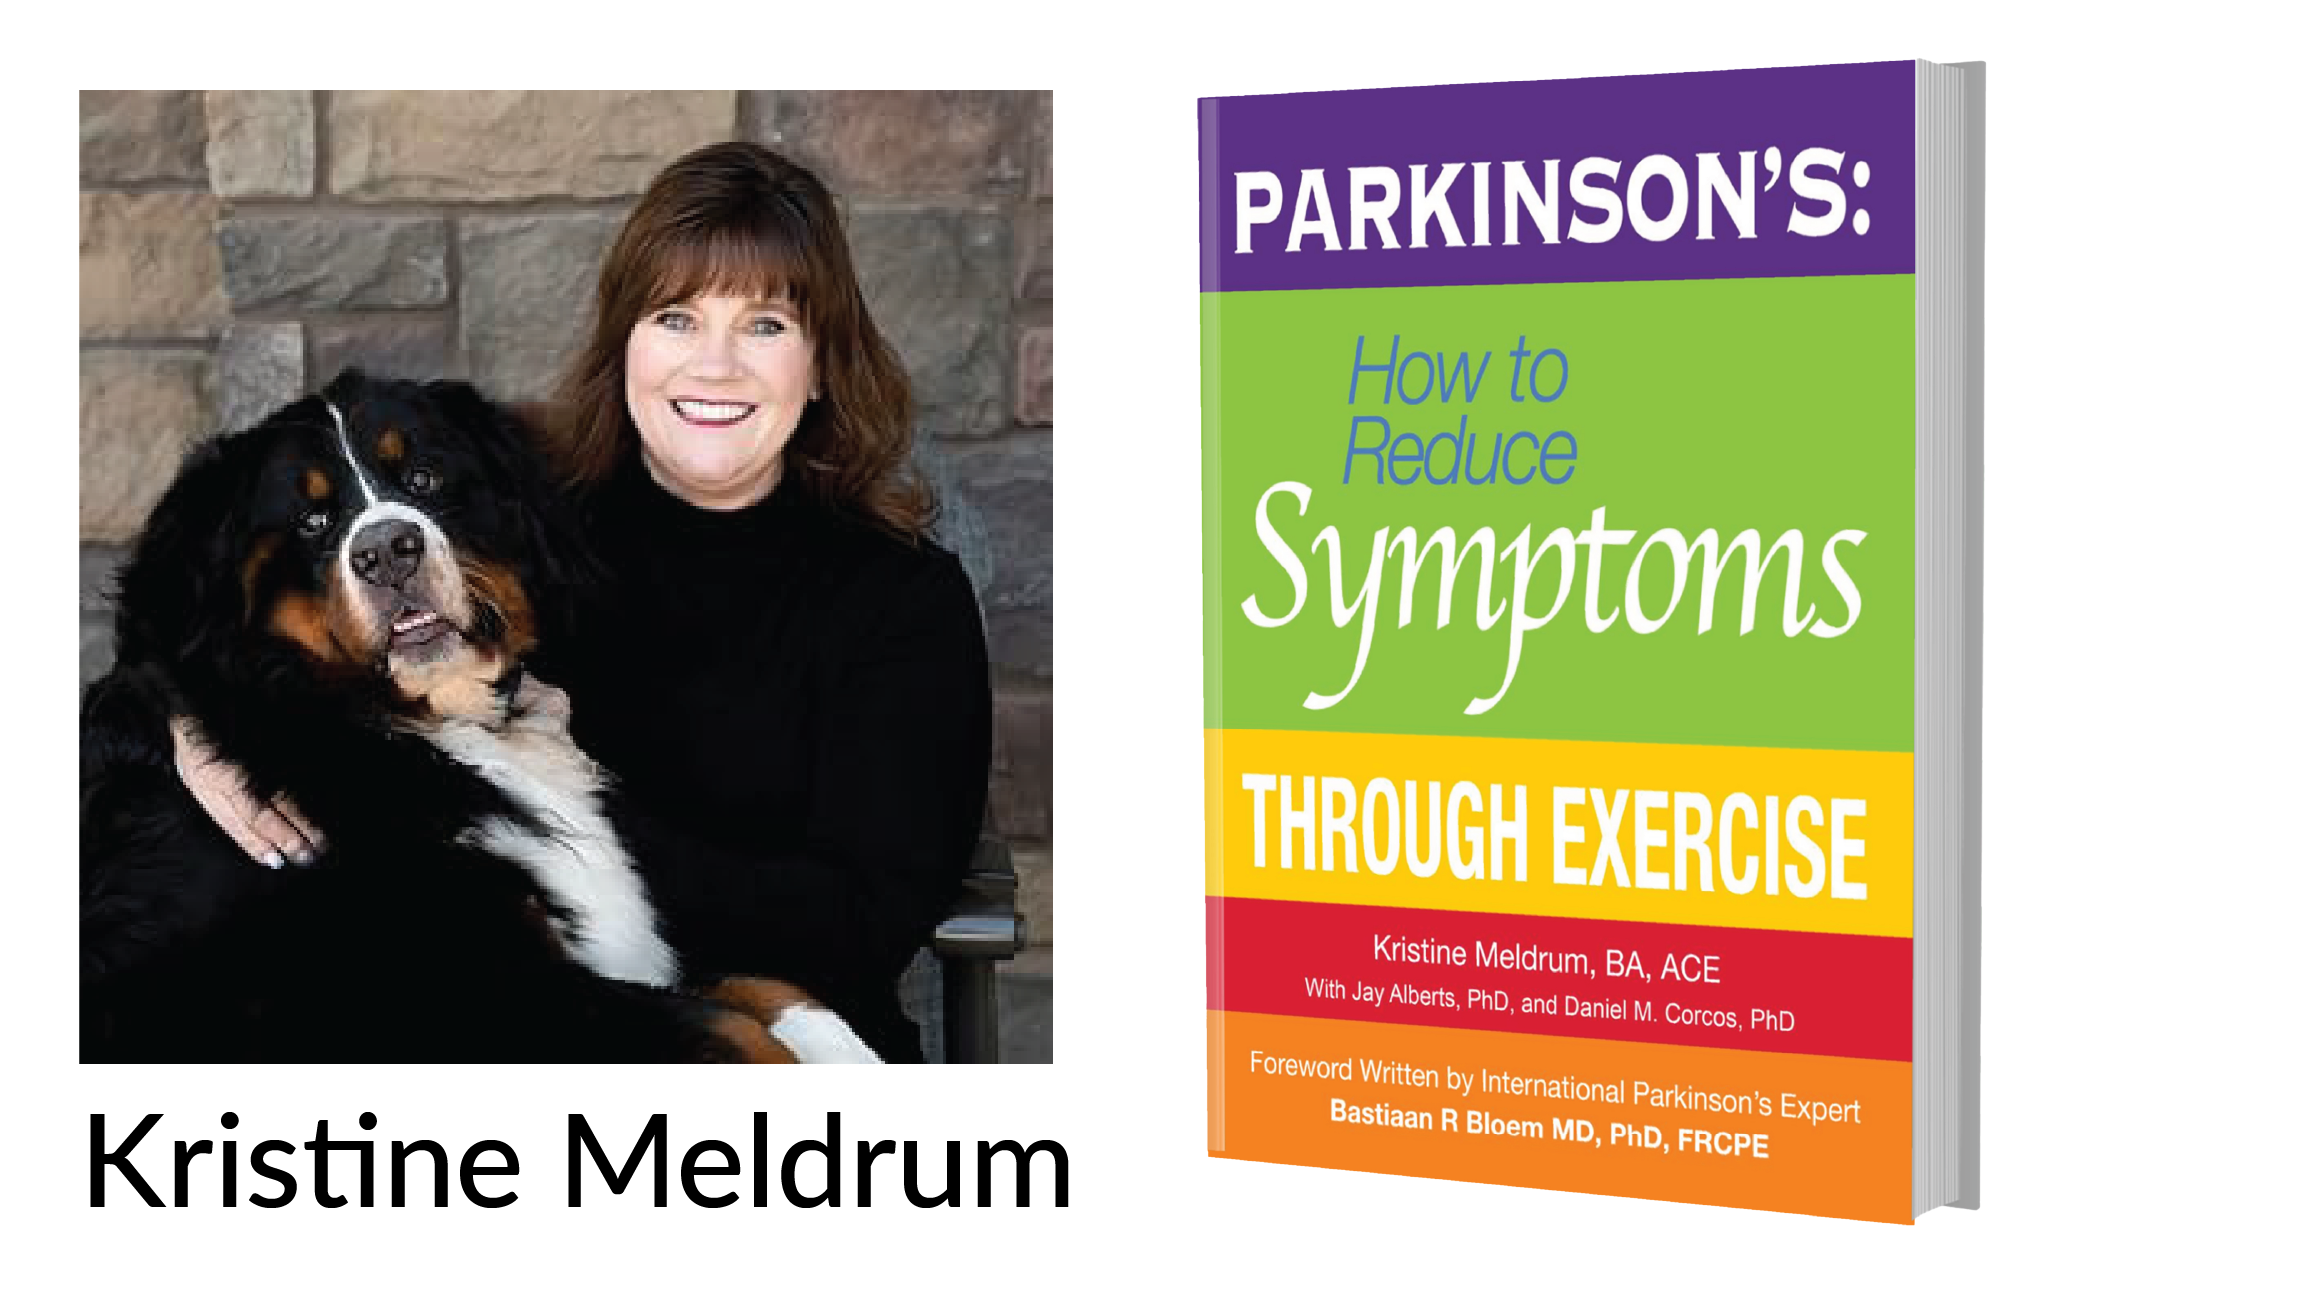 Parkinson’s: How to Reduce Symptoms Through Exercise